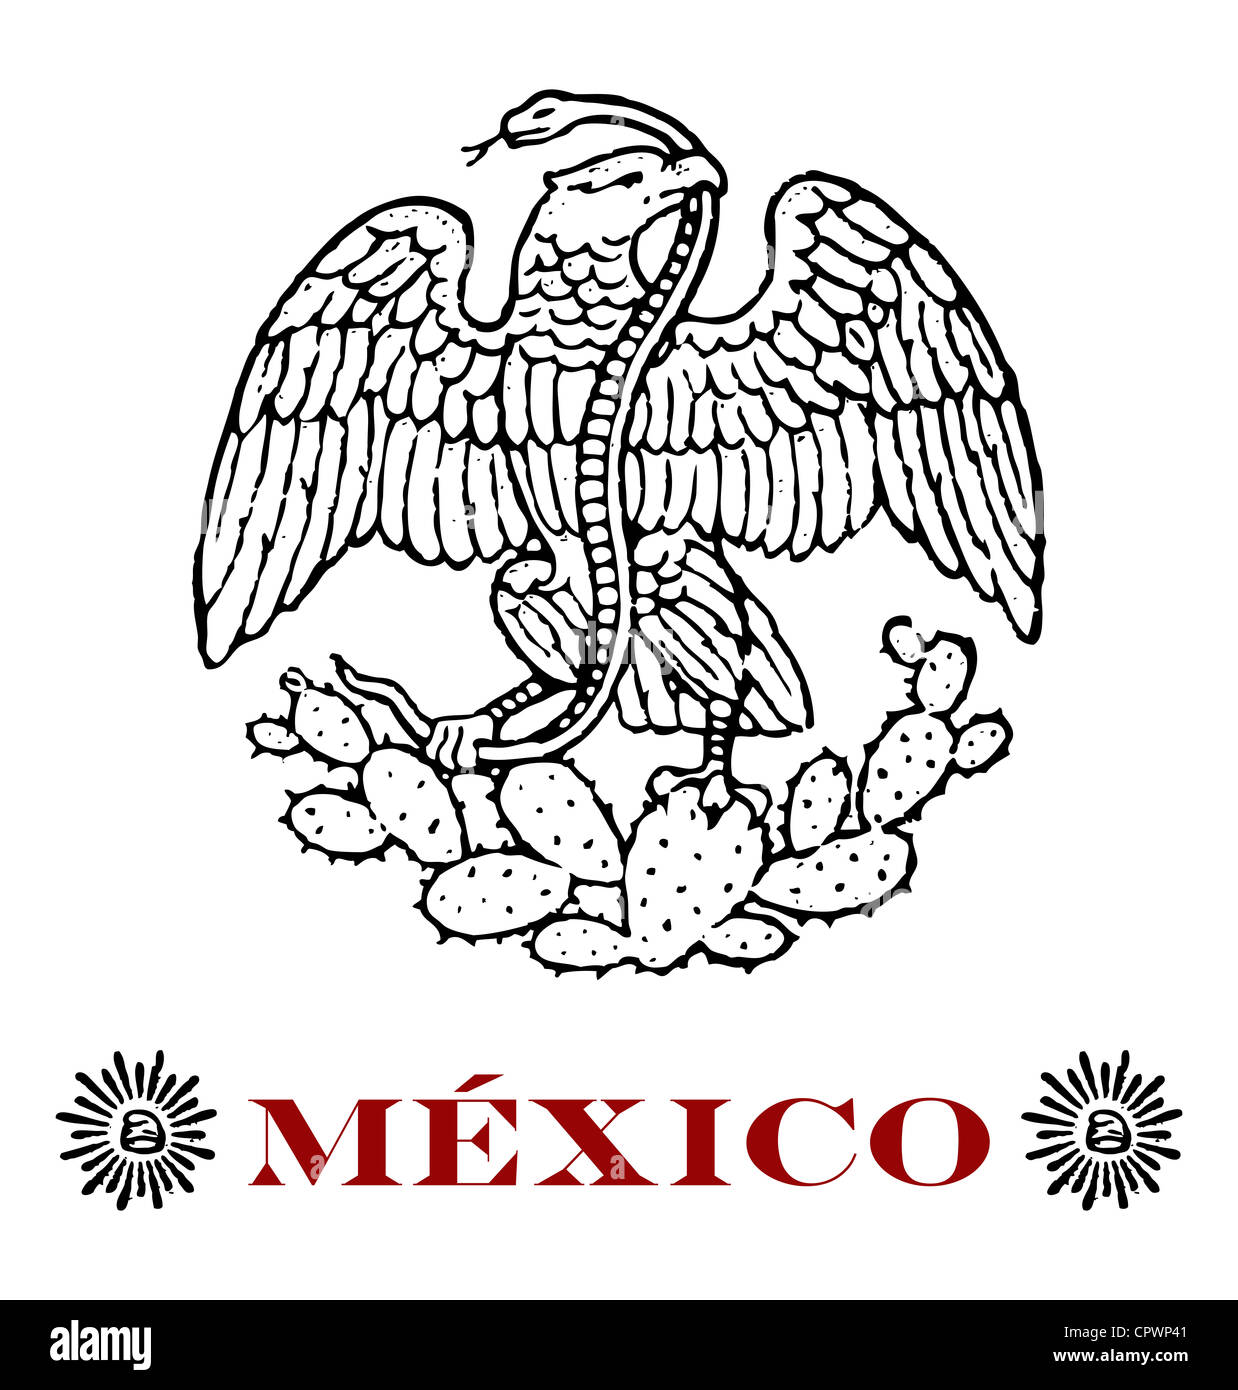 Aguila mexicana Imágenes recortadas de stock - Alamy